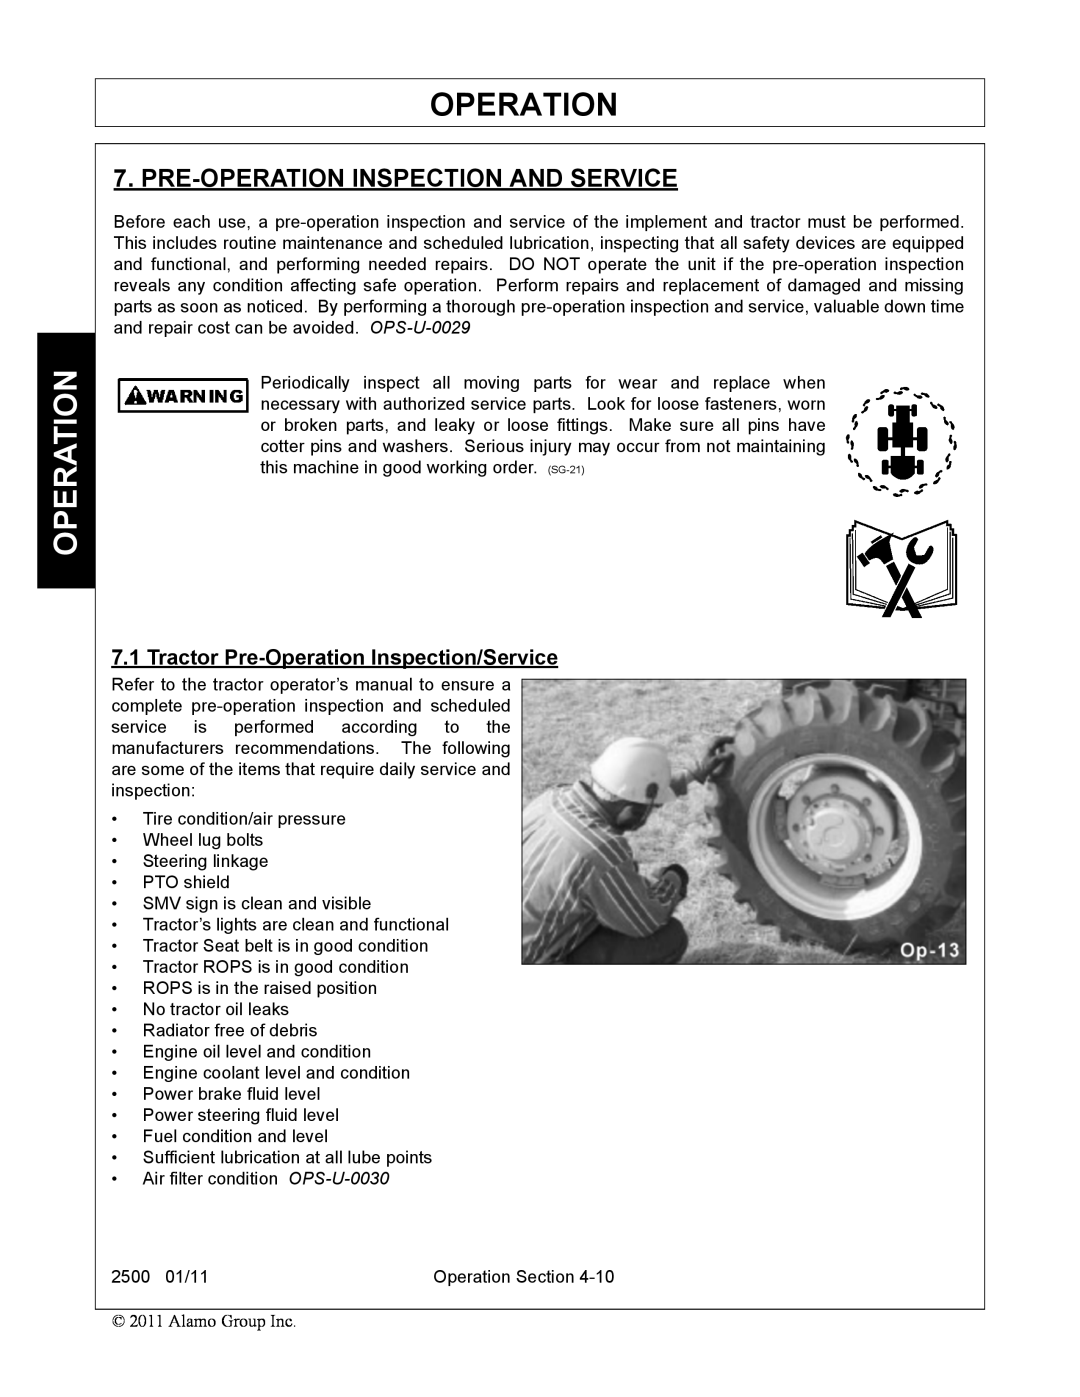 Alamo 2500 manual Pre-Operationinspection And Service, Tractor Pre-OperationInspection/Service 